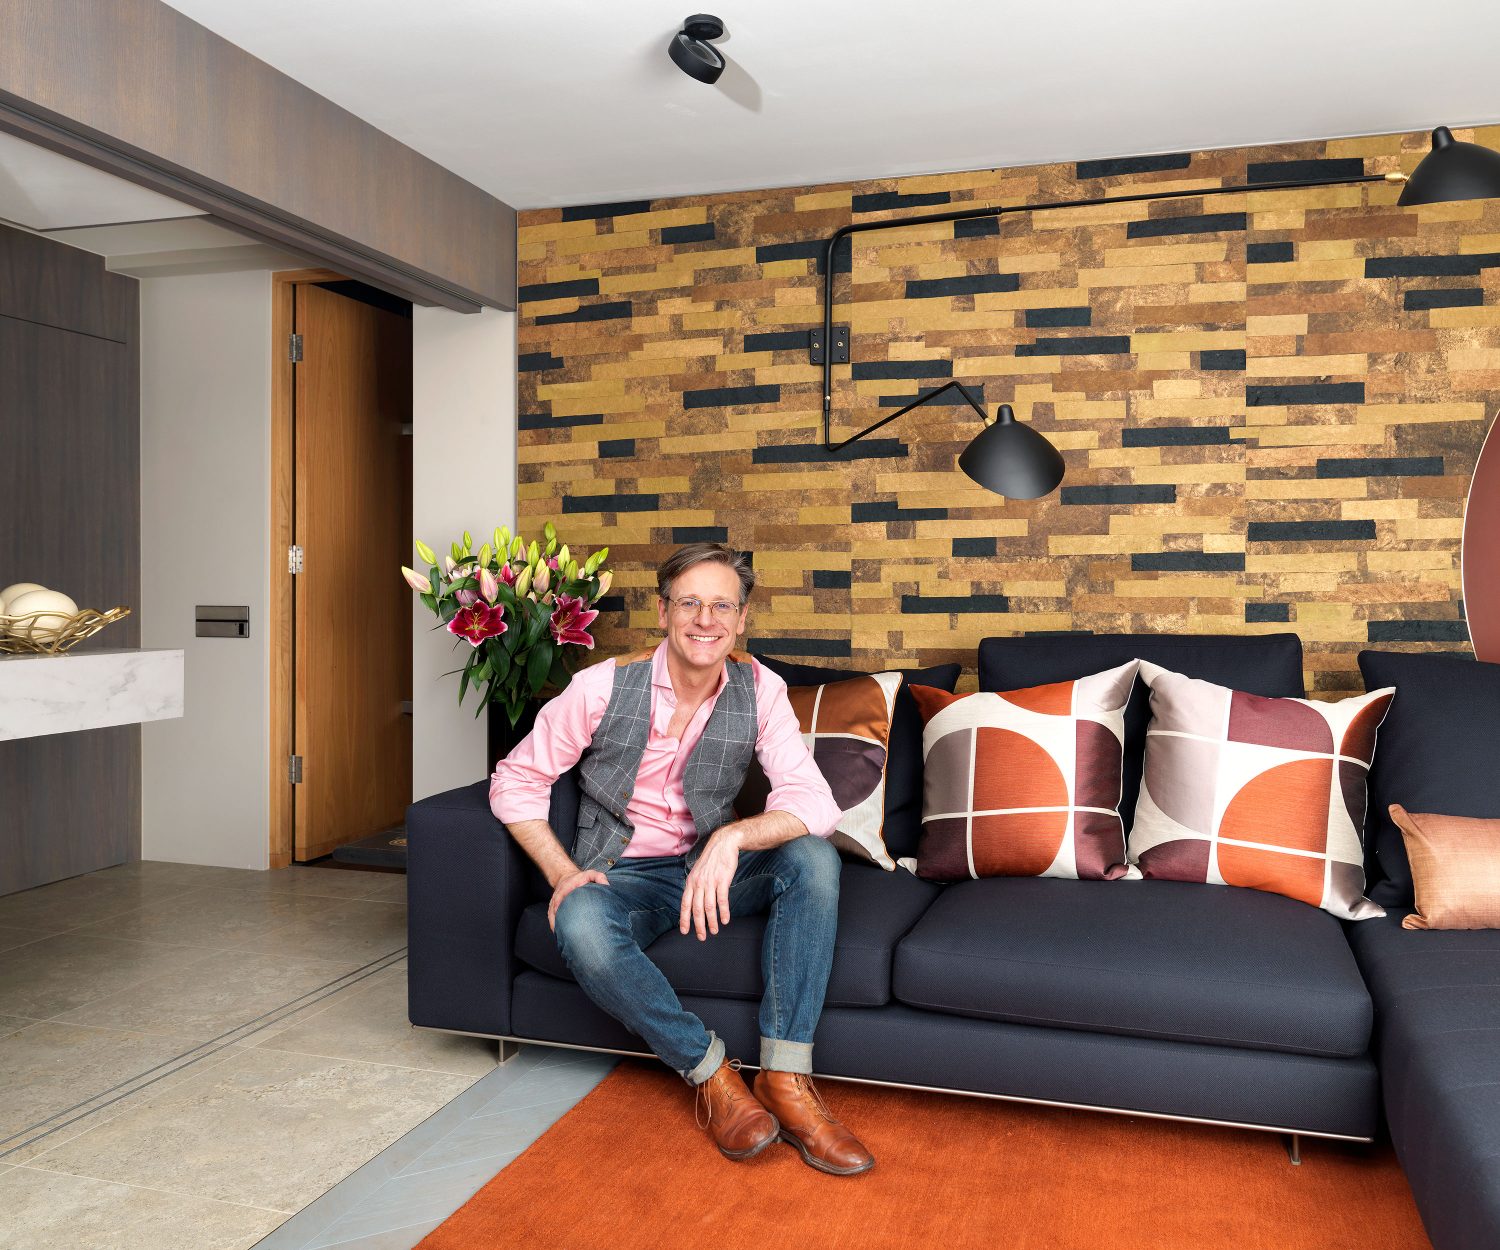 Minotti Sofa - Daniel Hopwood home design - interior design London